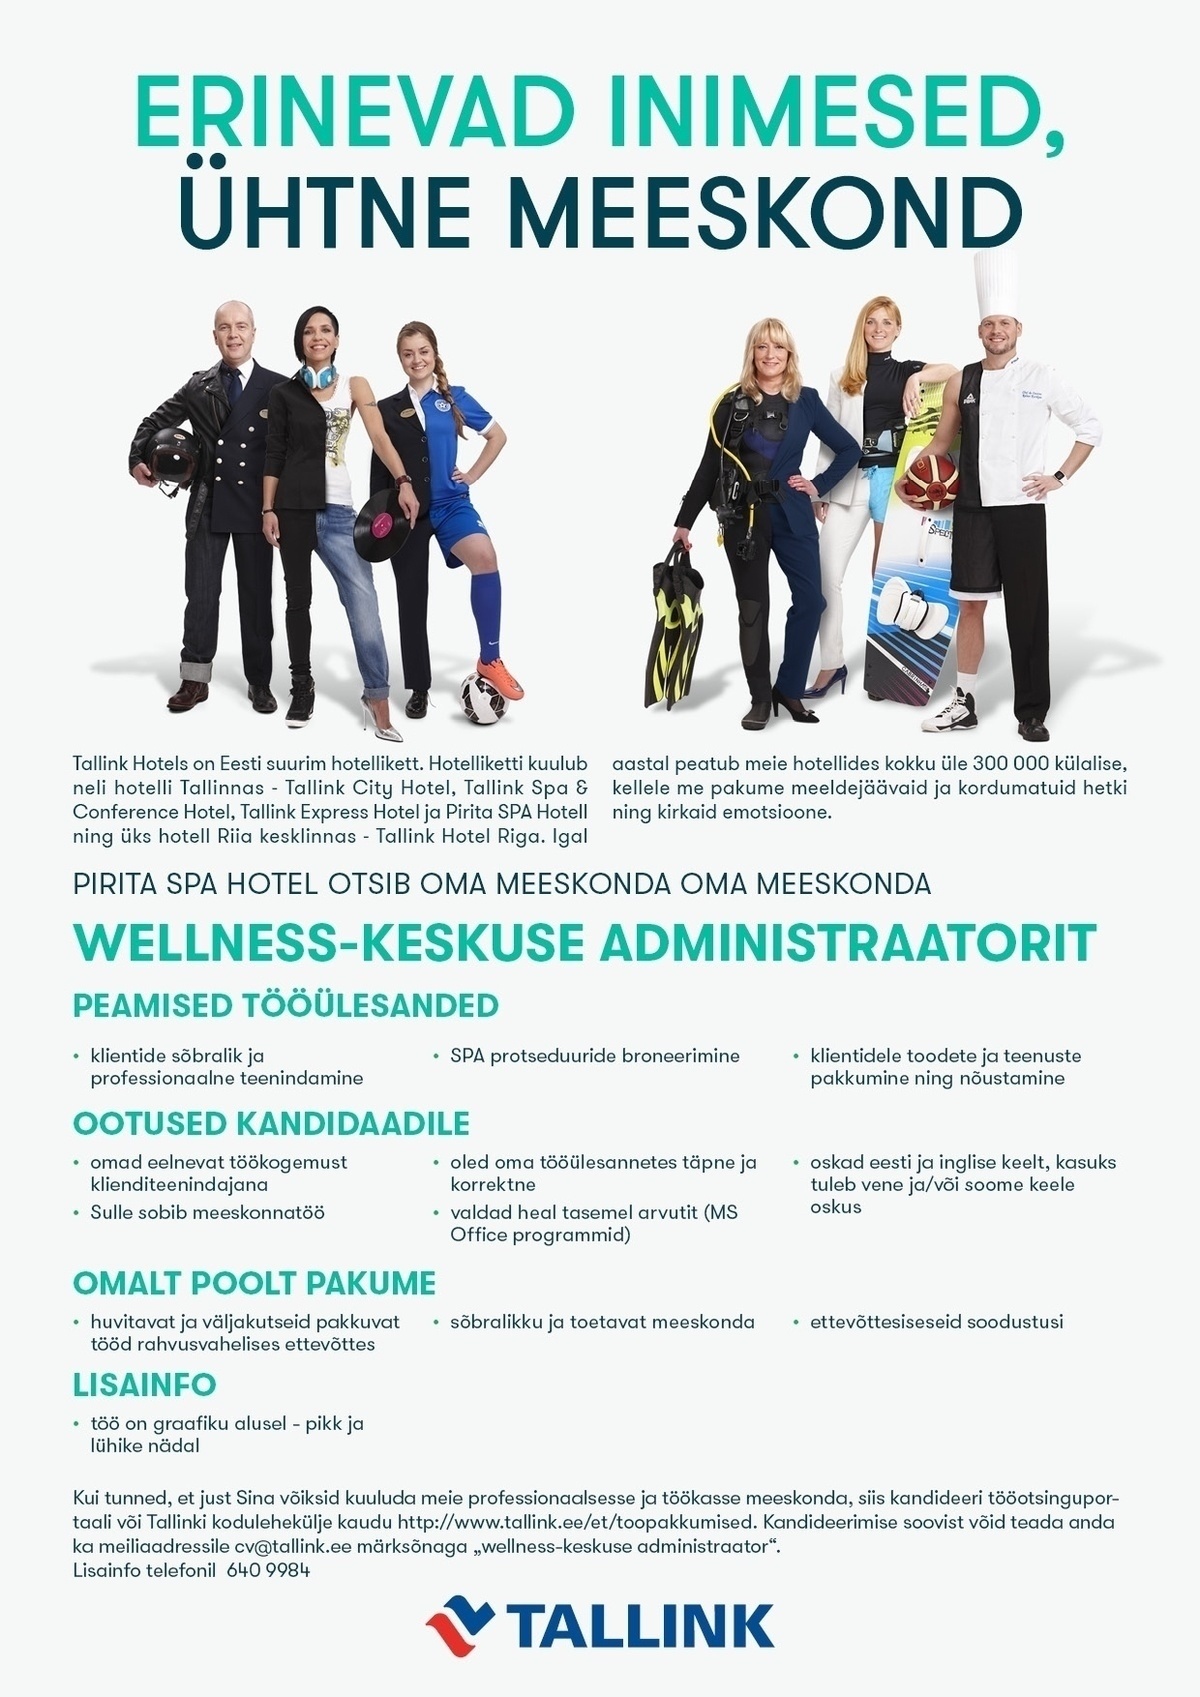 Tallink Grupp AS Wellness-keskuse administraator (Pirita SPA Hotel)